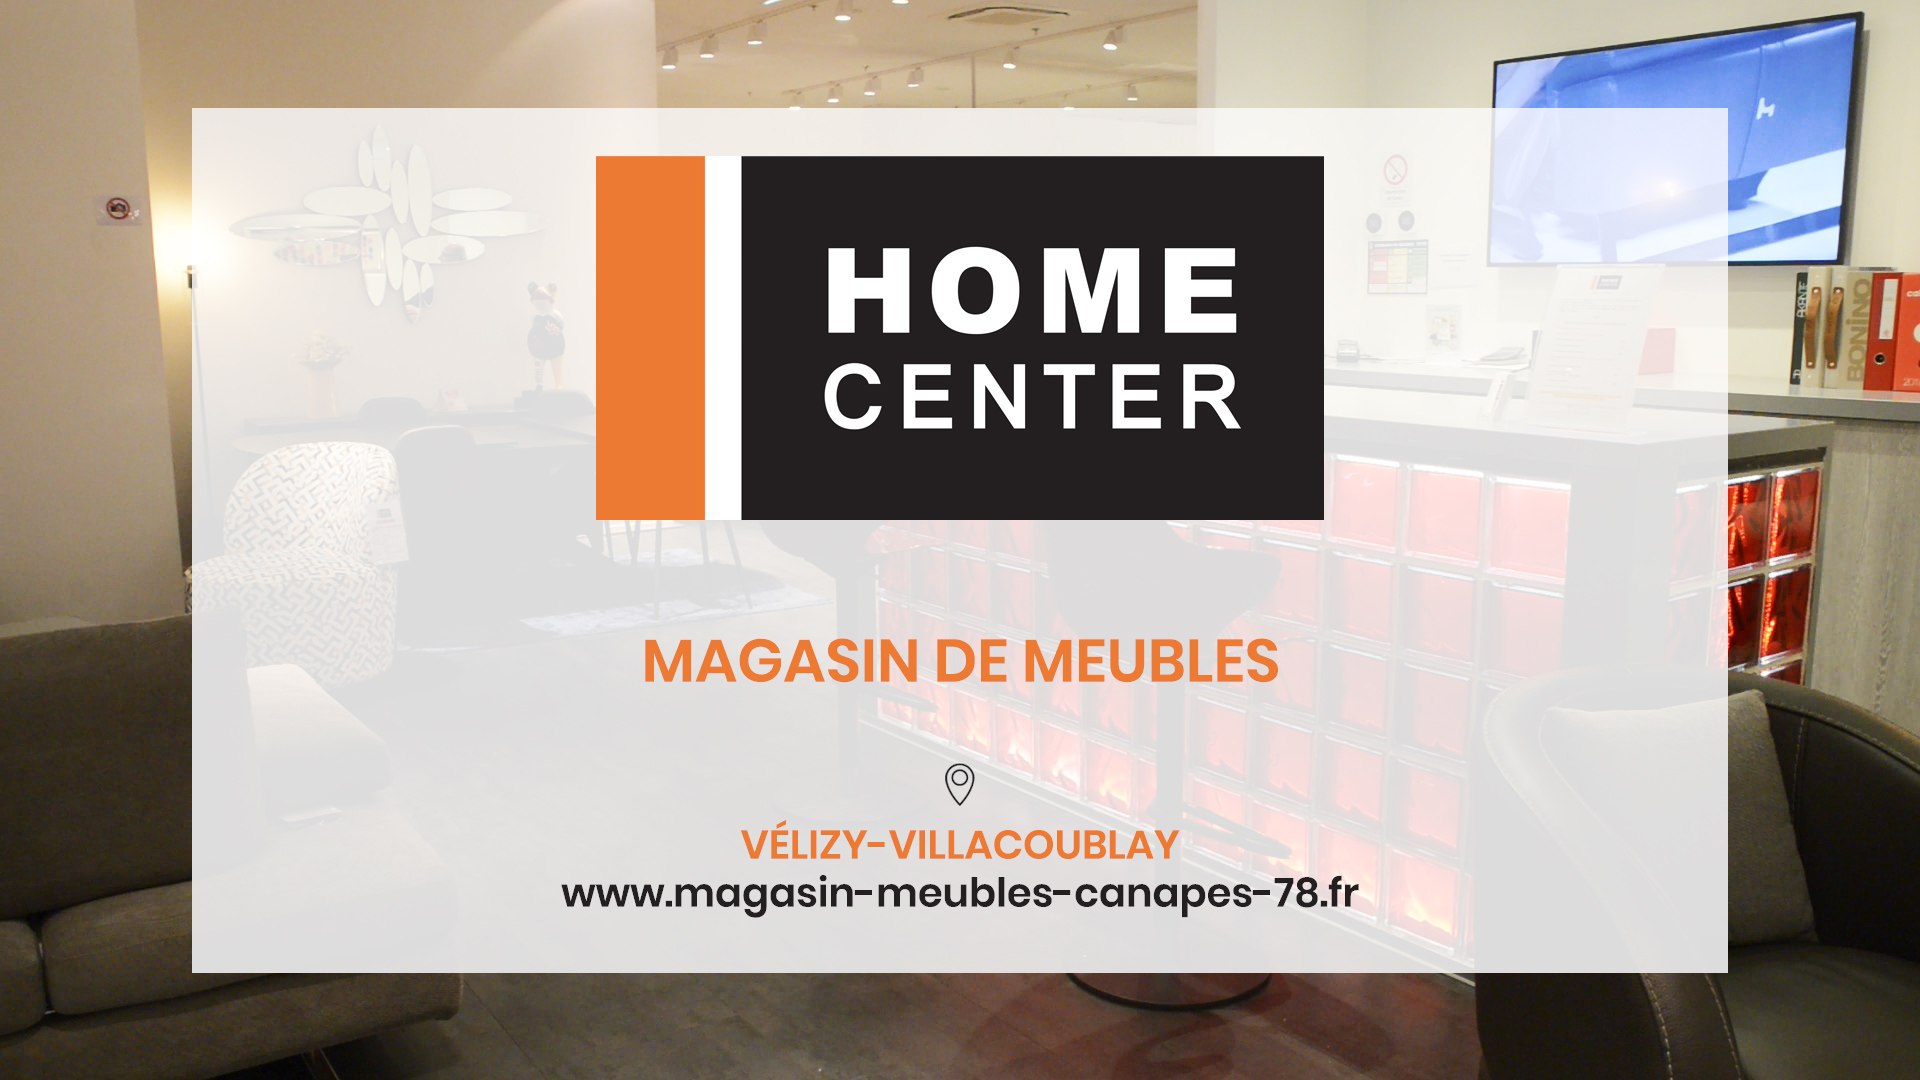 Home Center, magasin de meubles à Vélizy-Villacoublay. - Vidéo Dailymotion